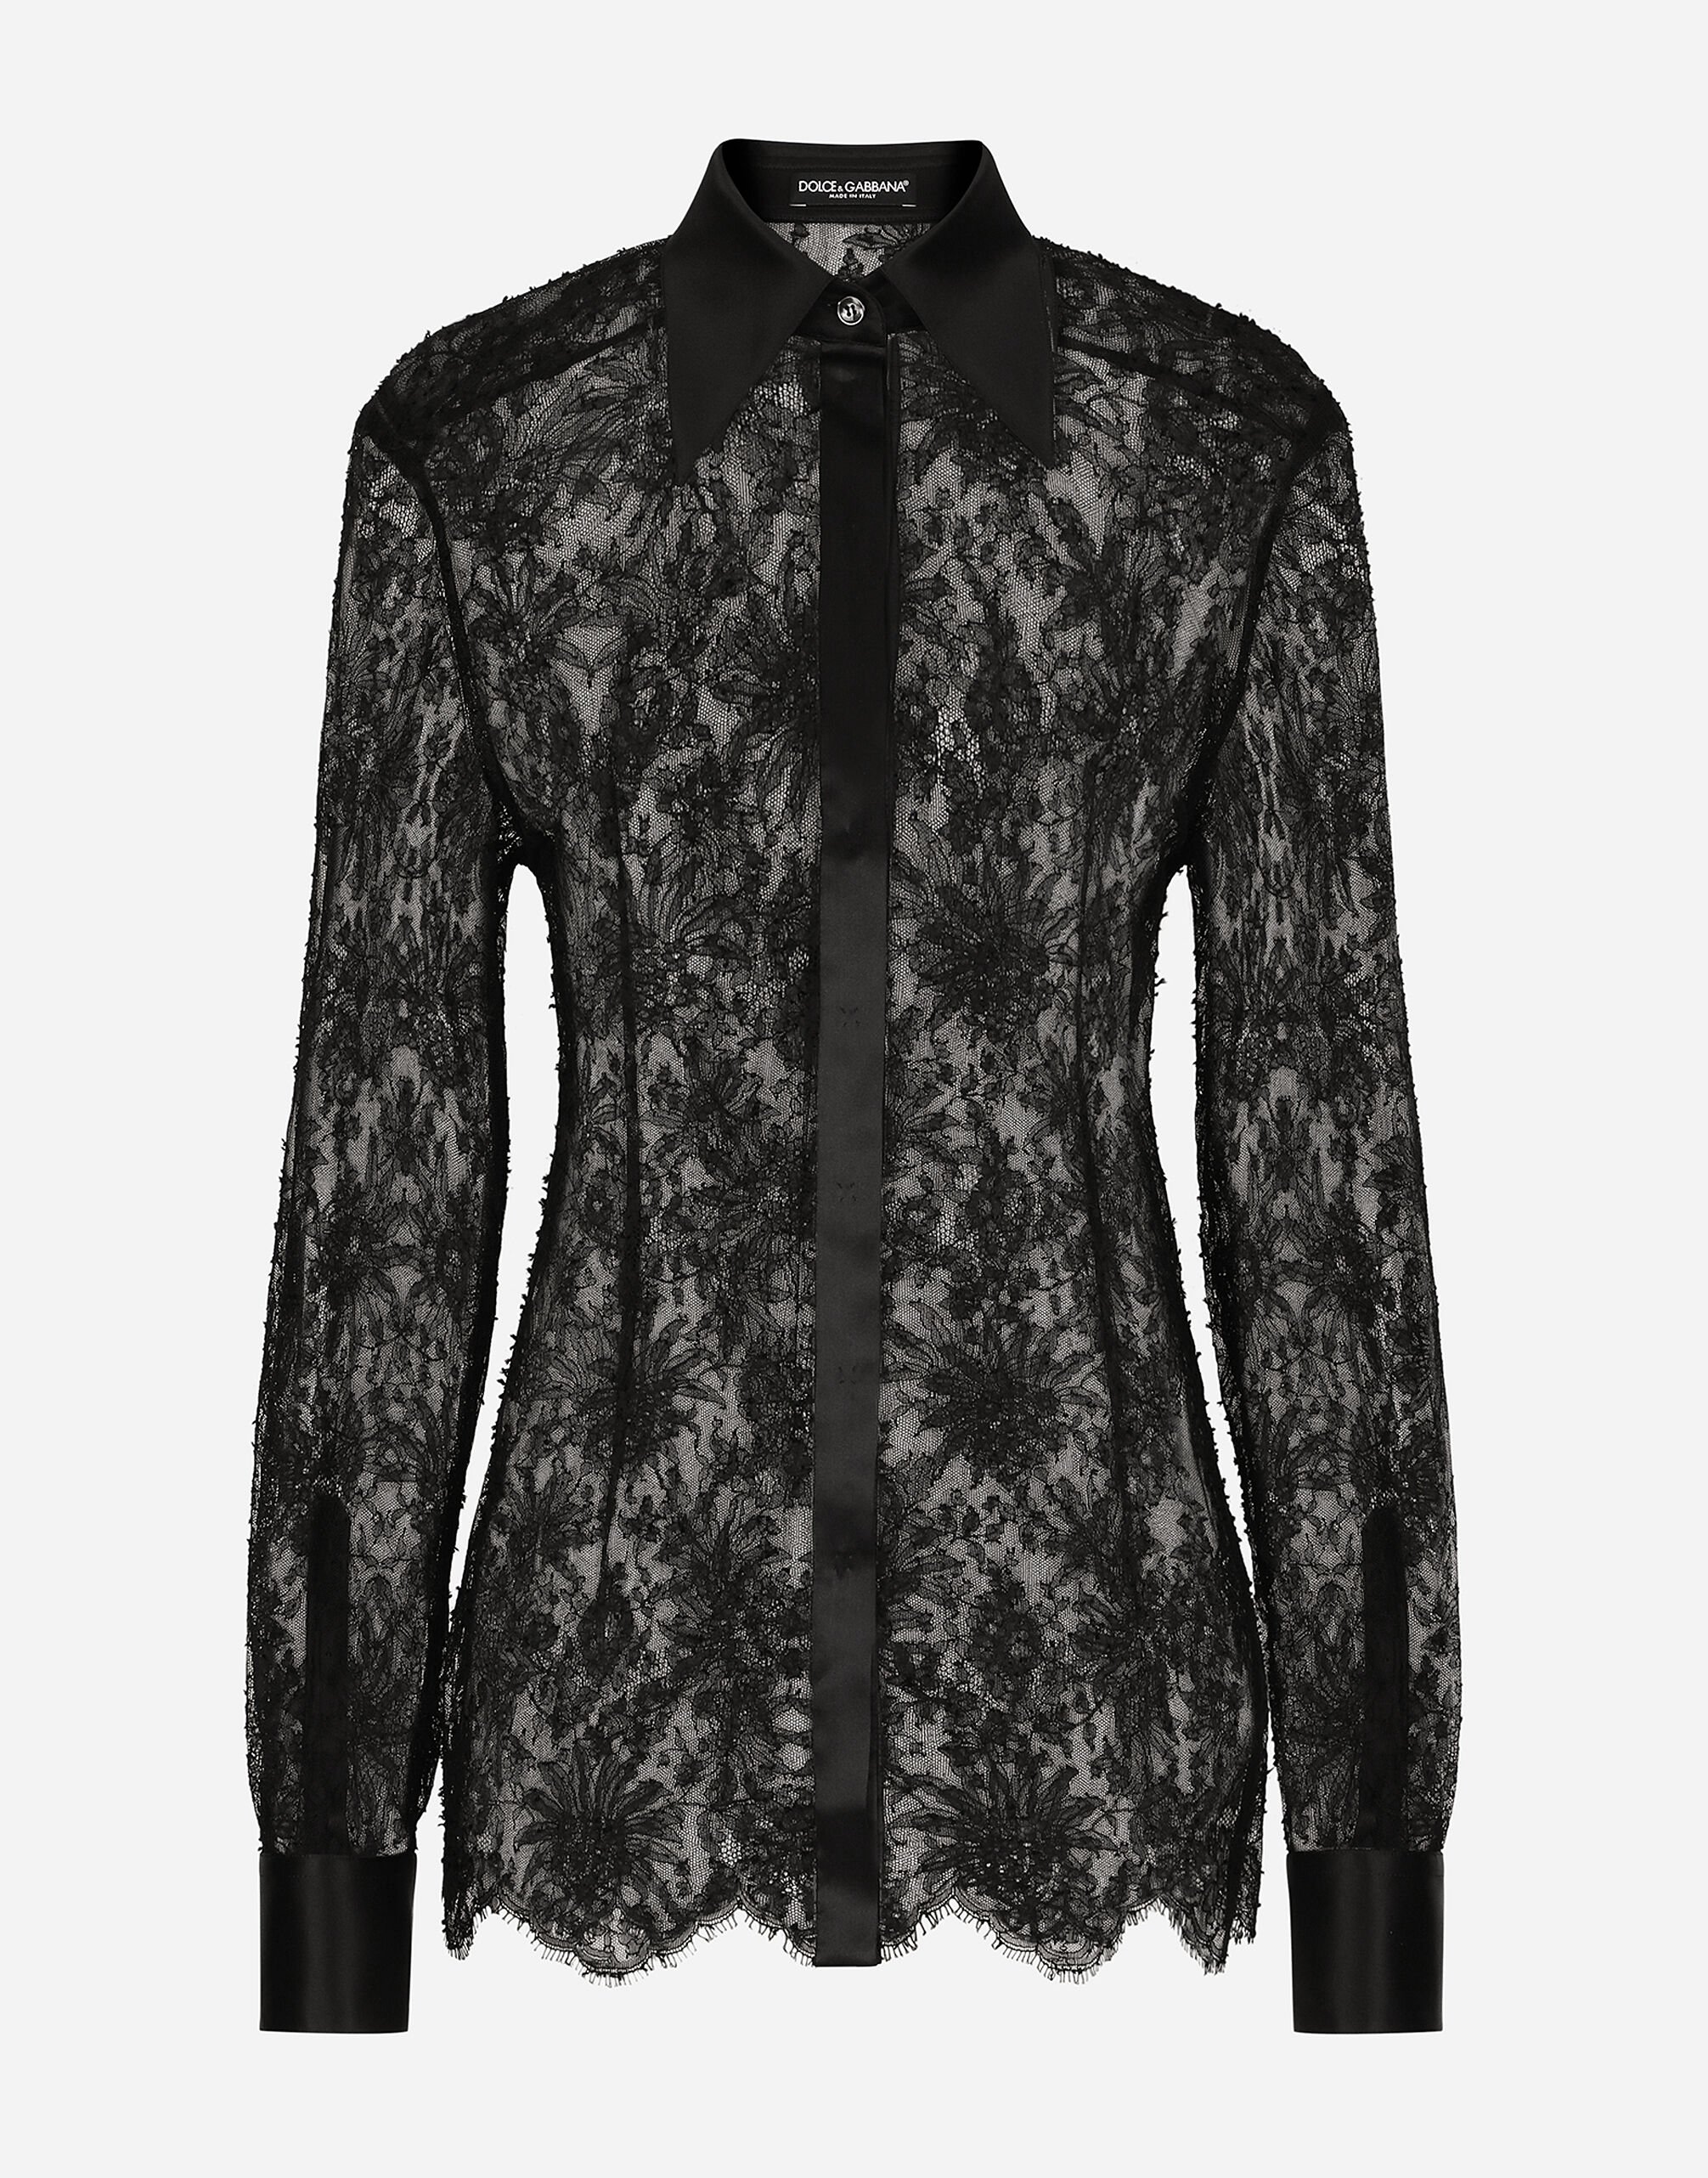 Dolce&Gabbana Chantilly lace shirt with satin details Black F6DKITFU1AT